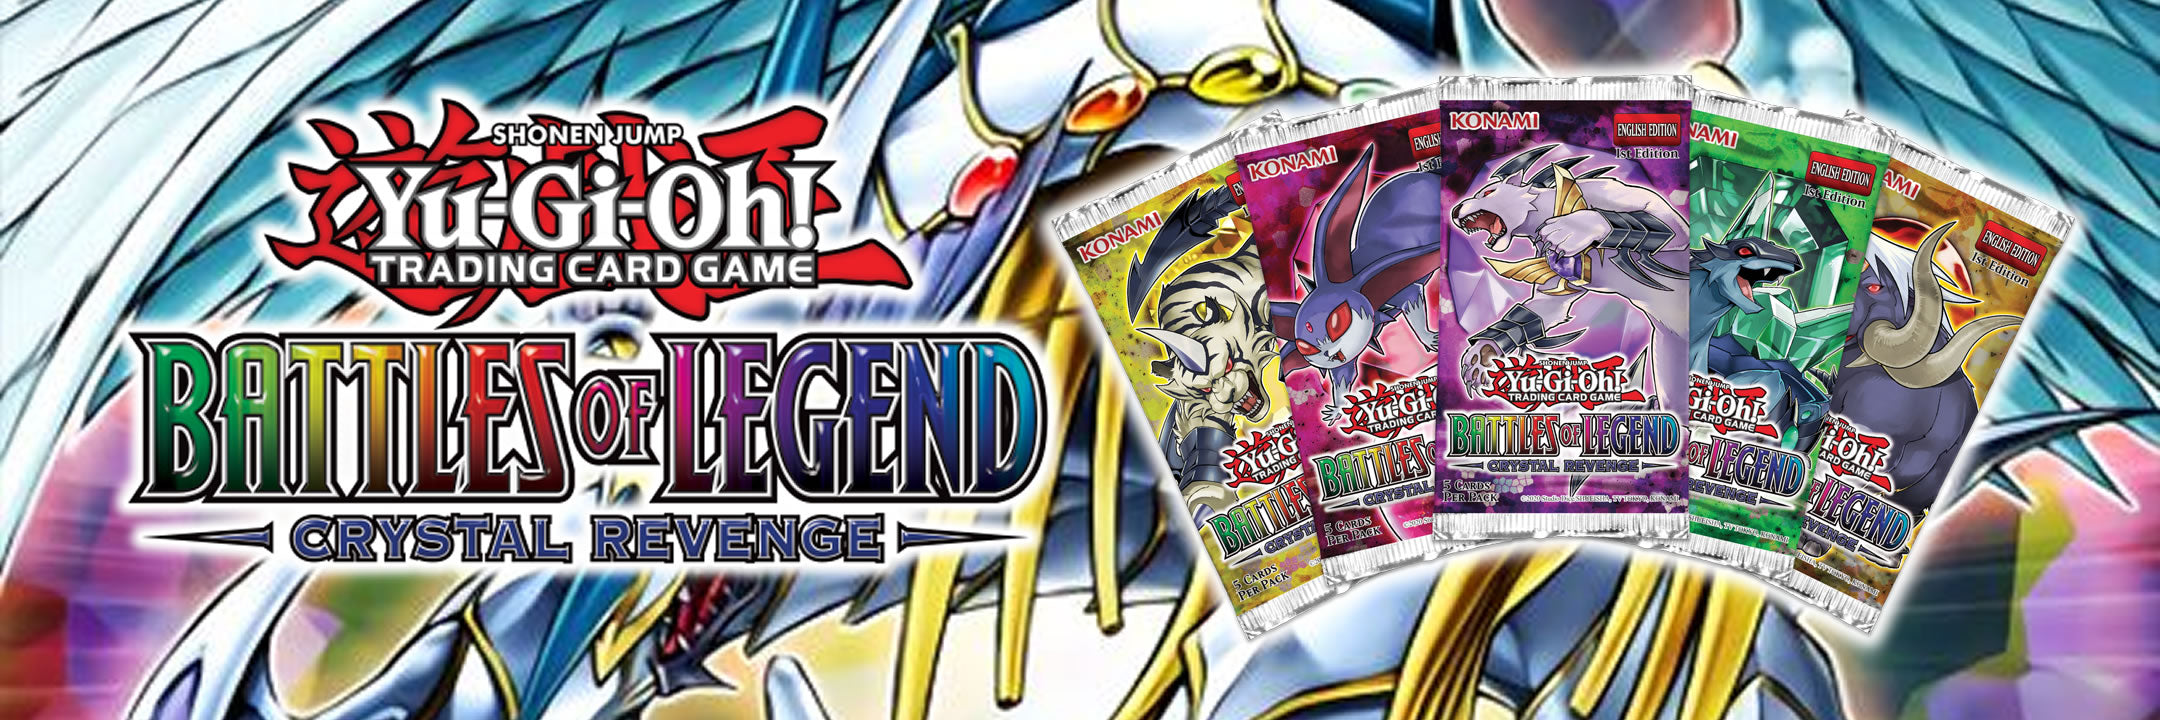 Yu-Gi-Oh! Trading Card Game - Battles of Legend: Crystal Revenge